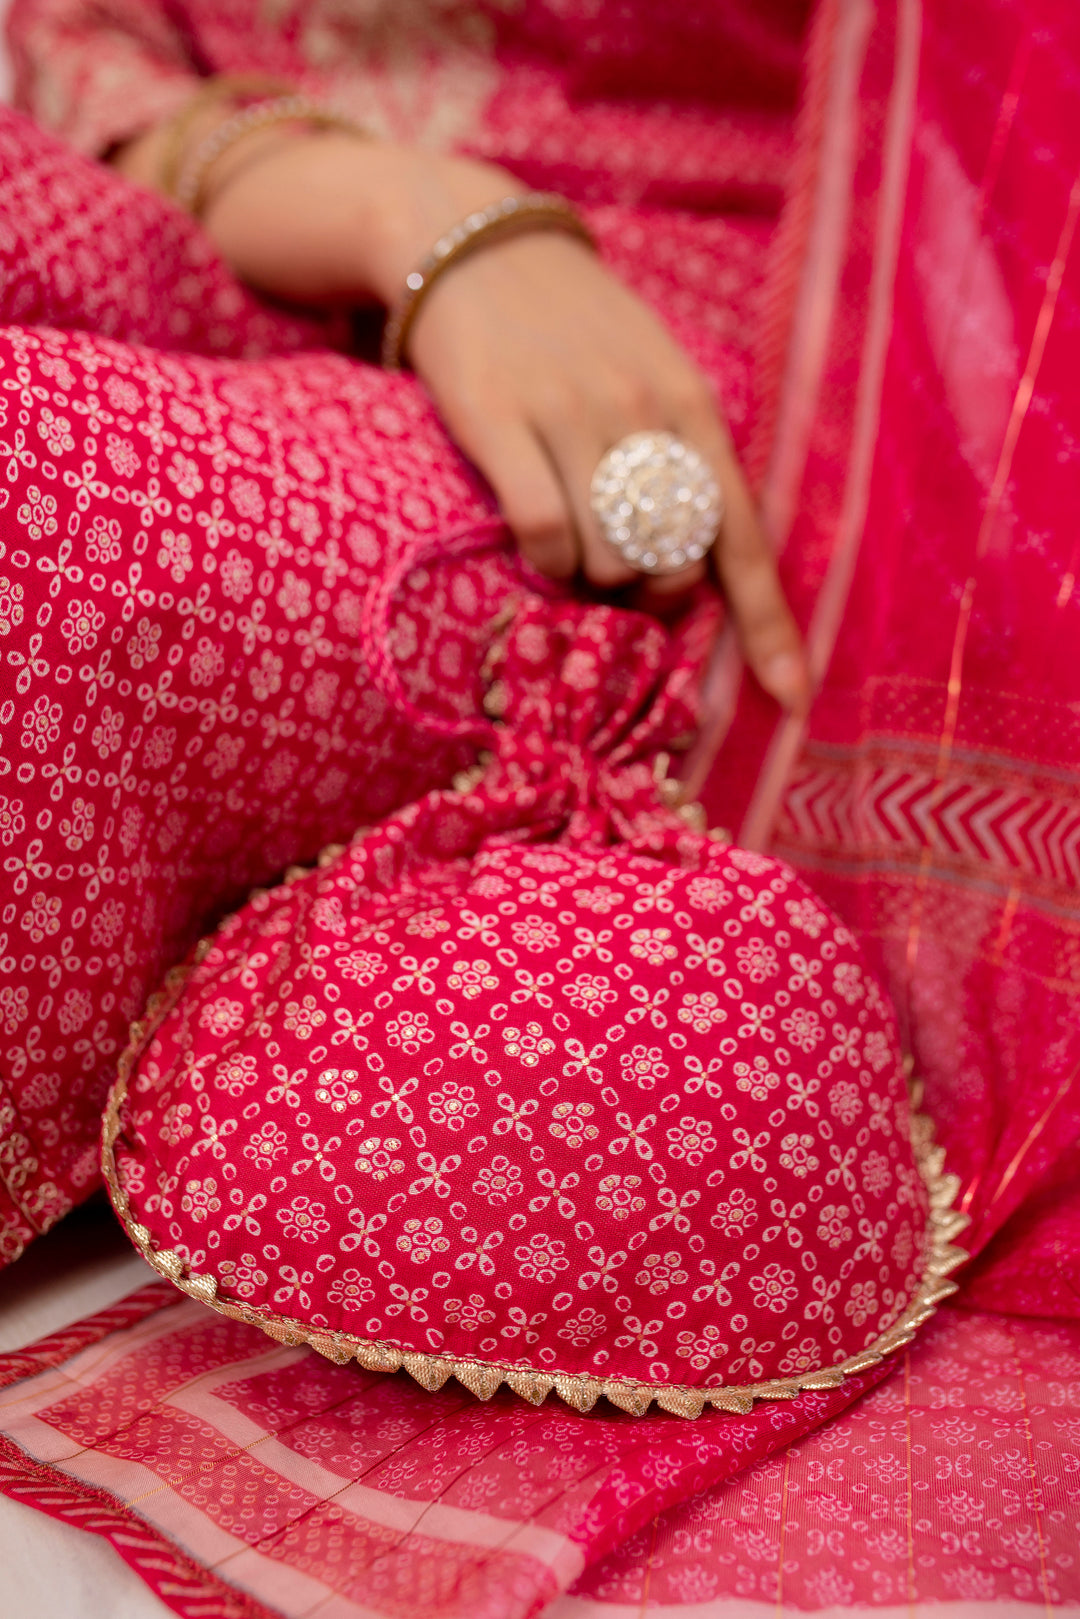 Women's Muslin Pink Straight Kurta, Afghani Salwar and Dupatta With Fancy Potli Set